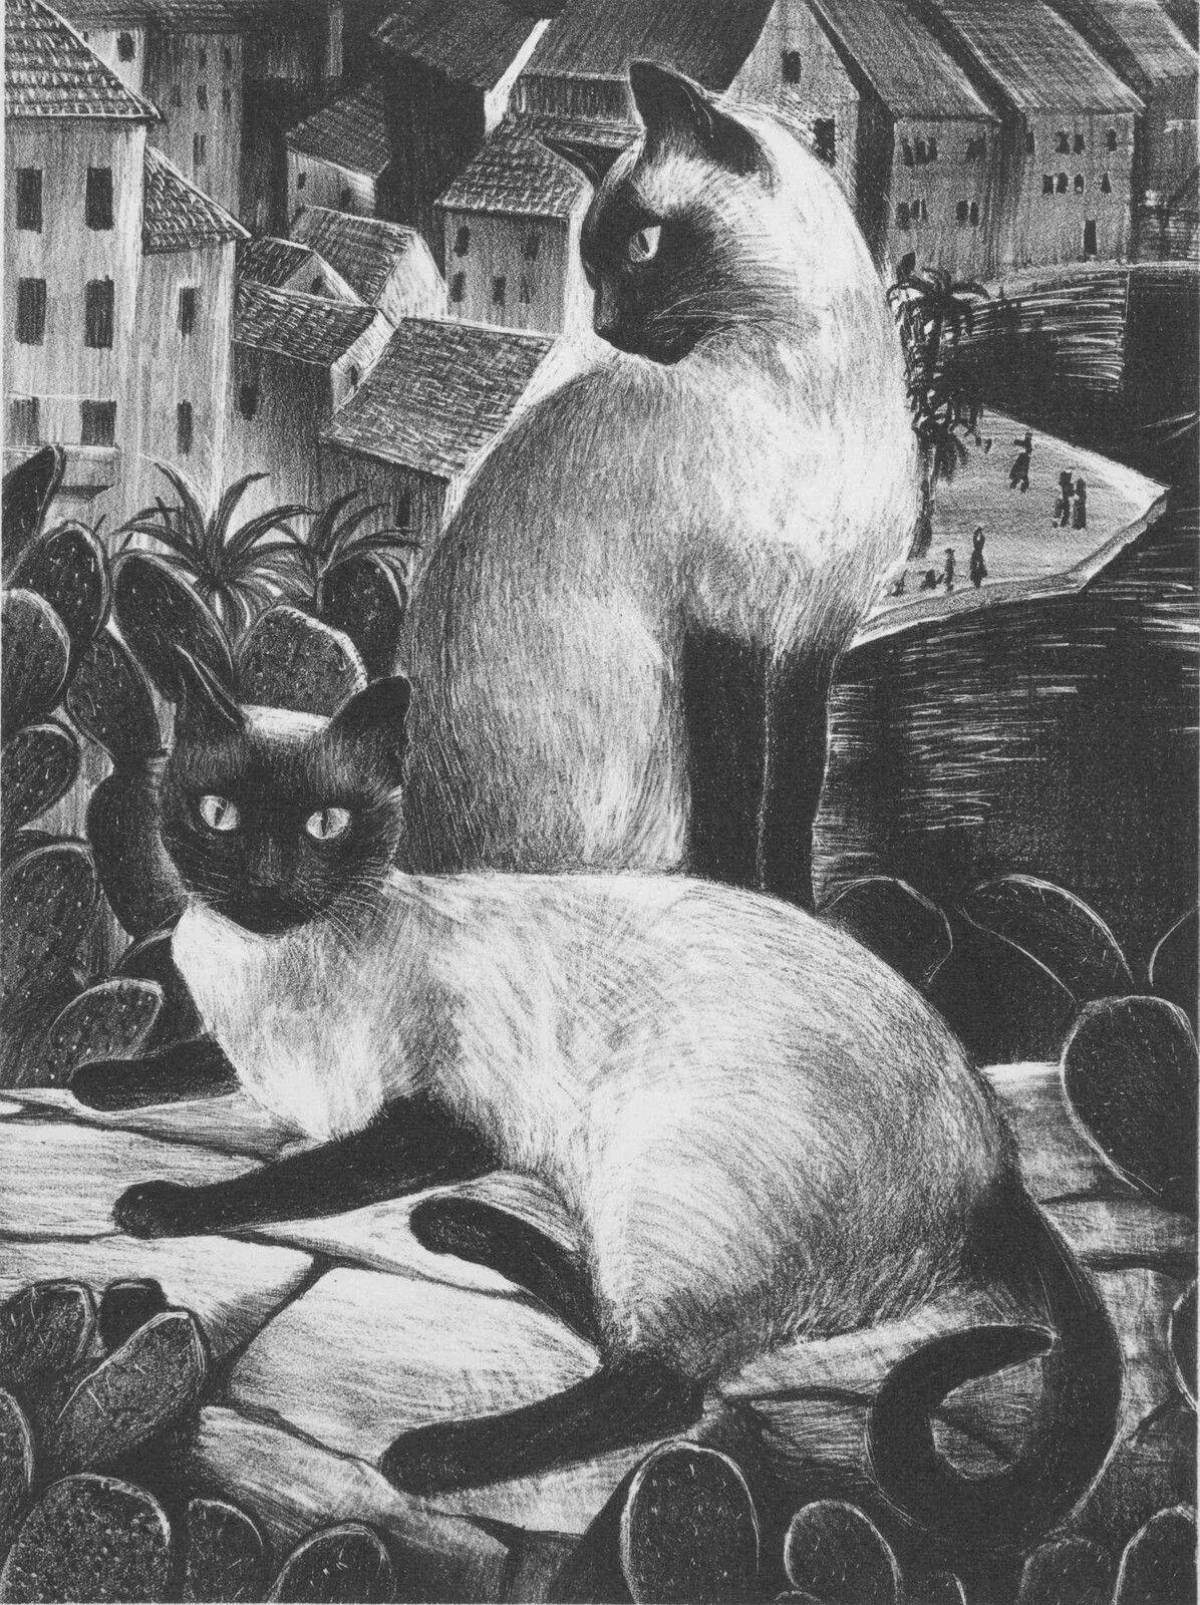 Adorable Siamese cat coloring book